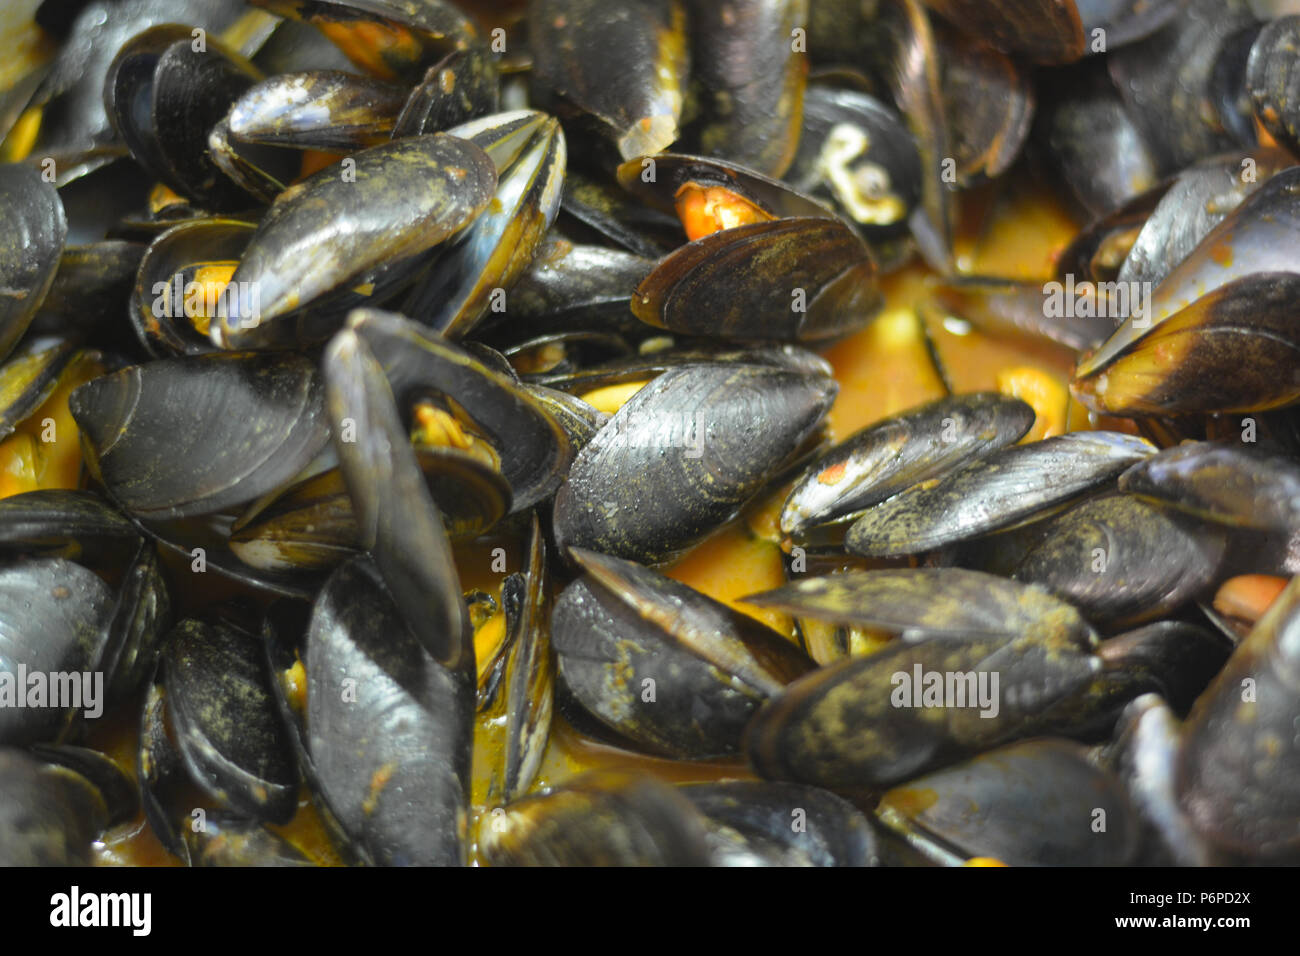 mussels with marinara sauce Stock Photo